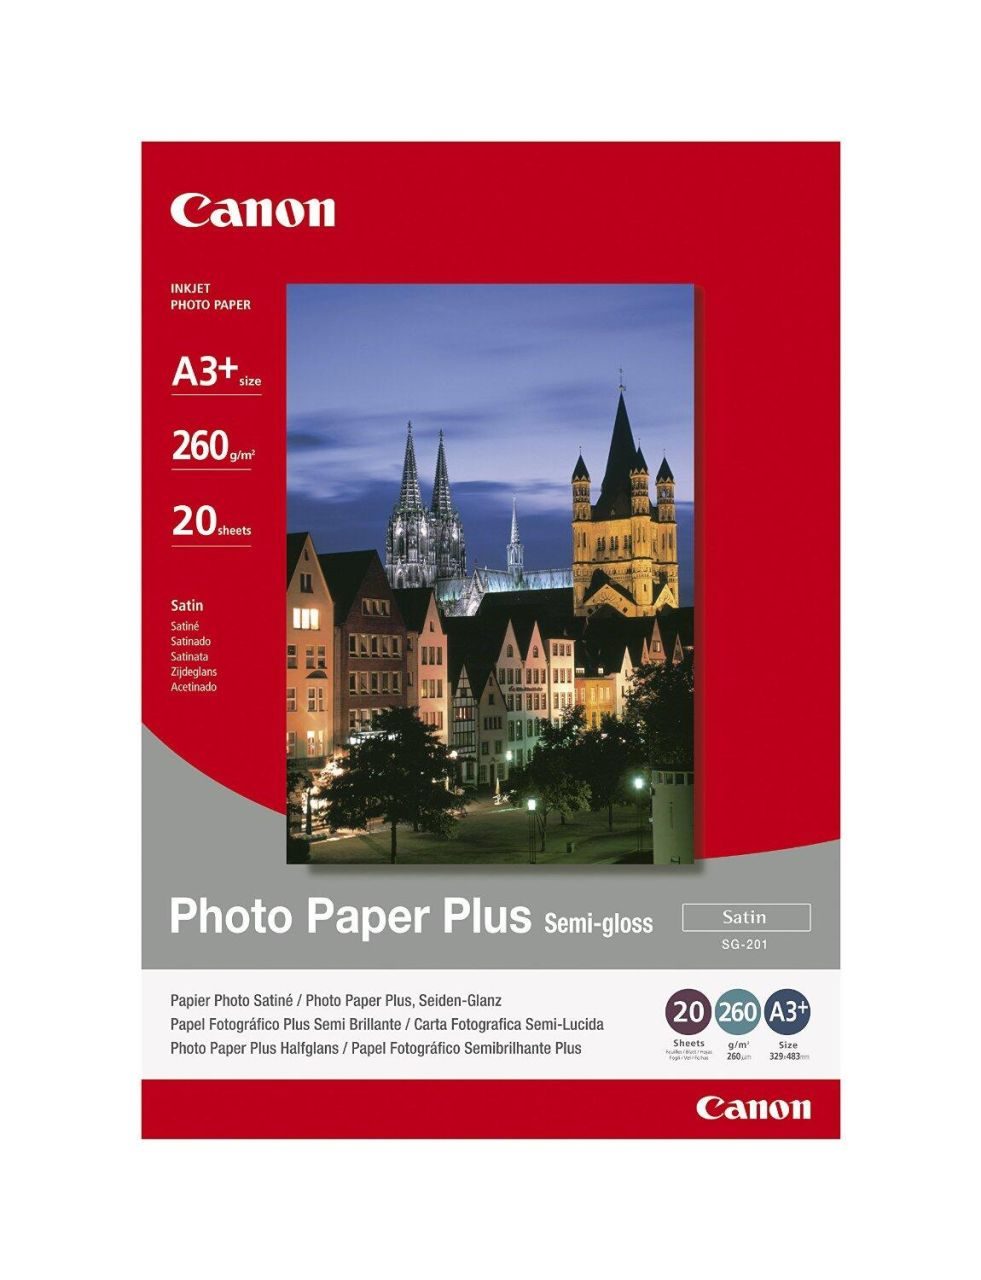 Canon SG-201 Fotopapier Plus seidenglanz A3+ 329x483mm 260 g/m² - 20 Blatt